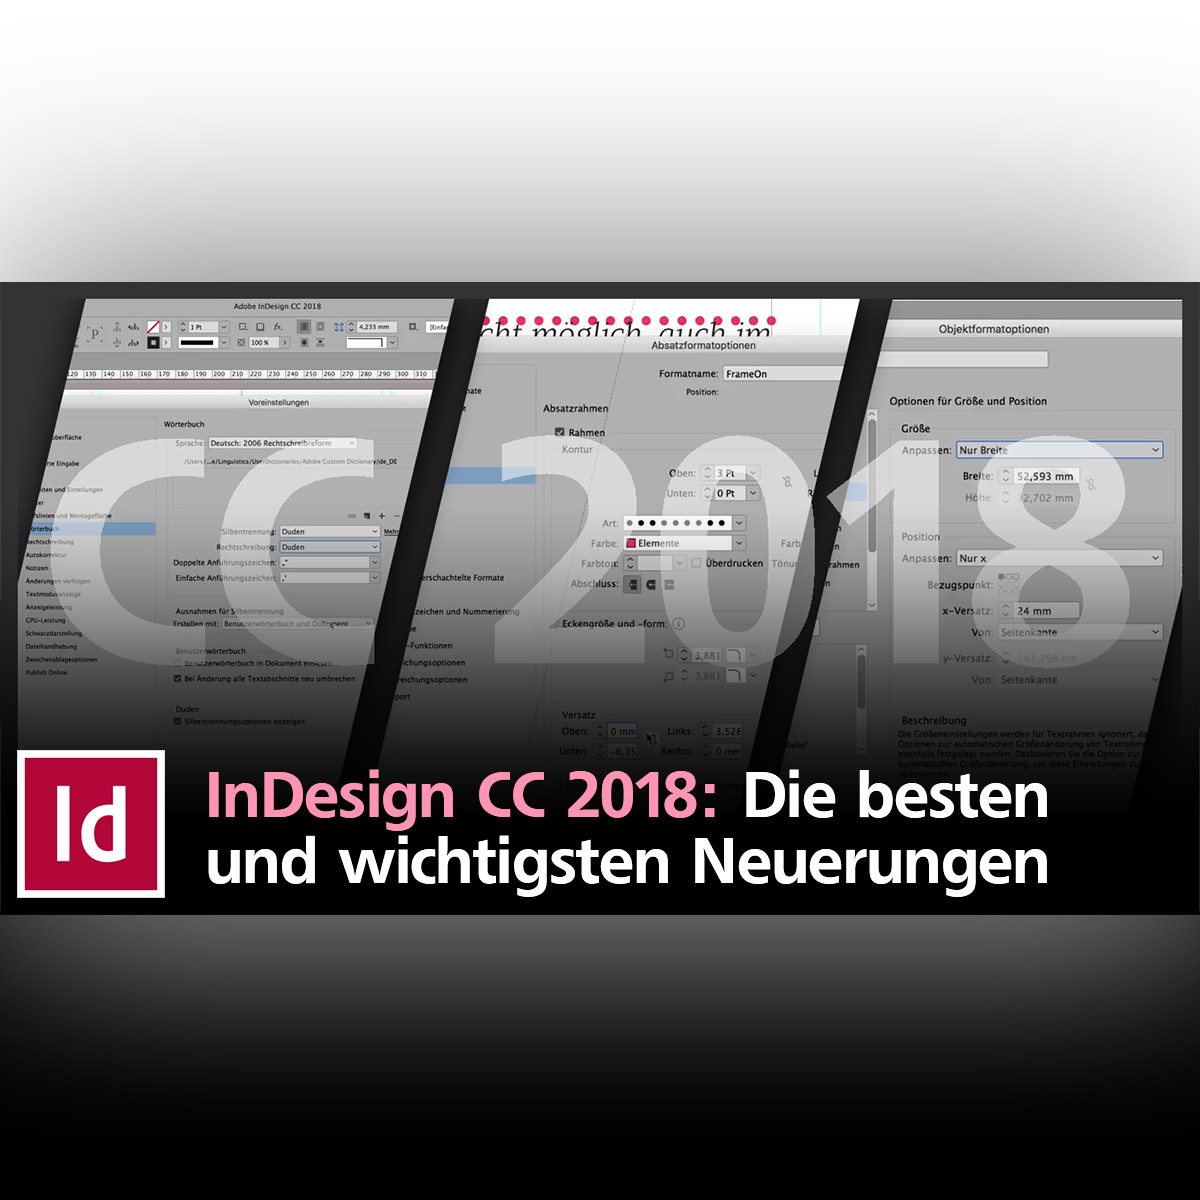 update indesign cc 2015 to 11.4